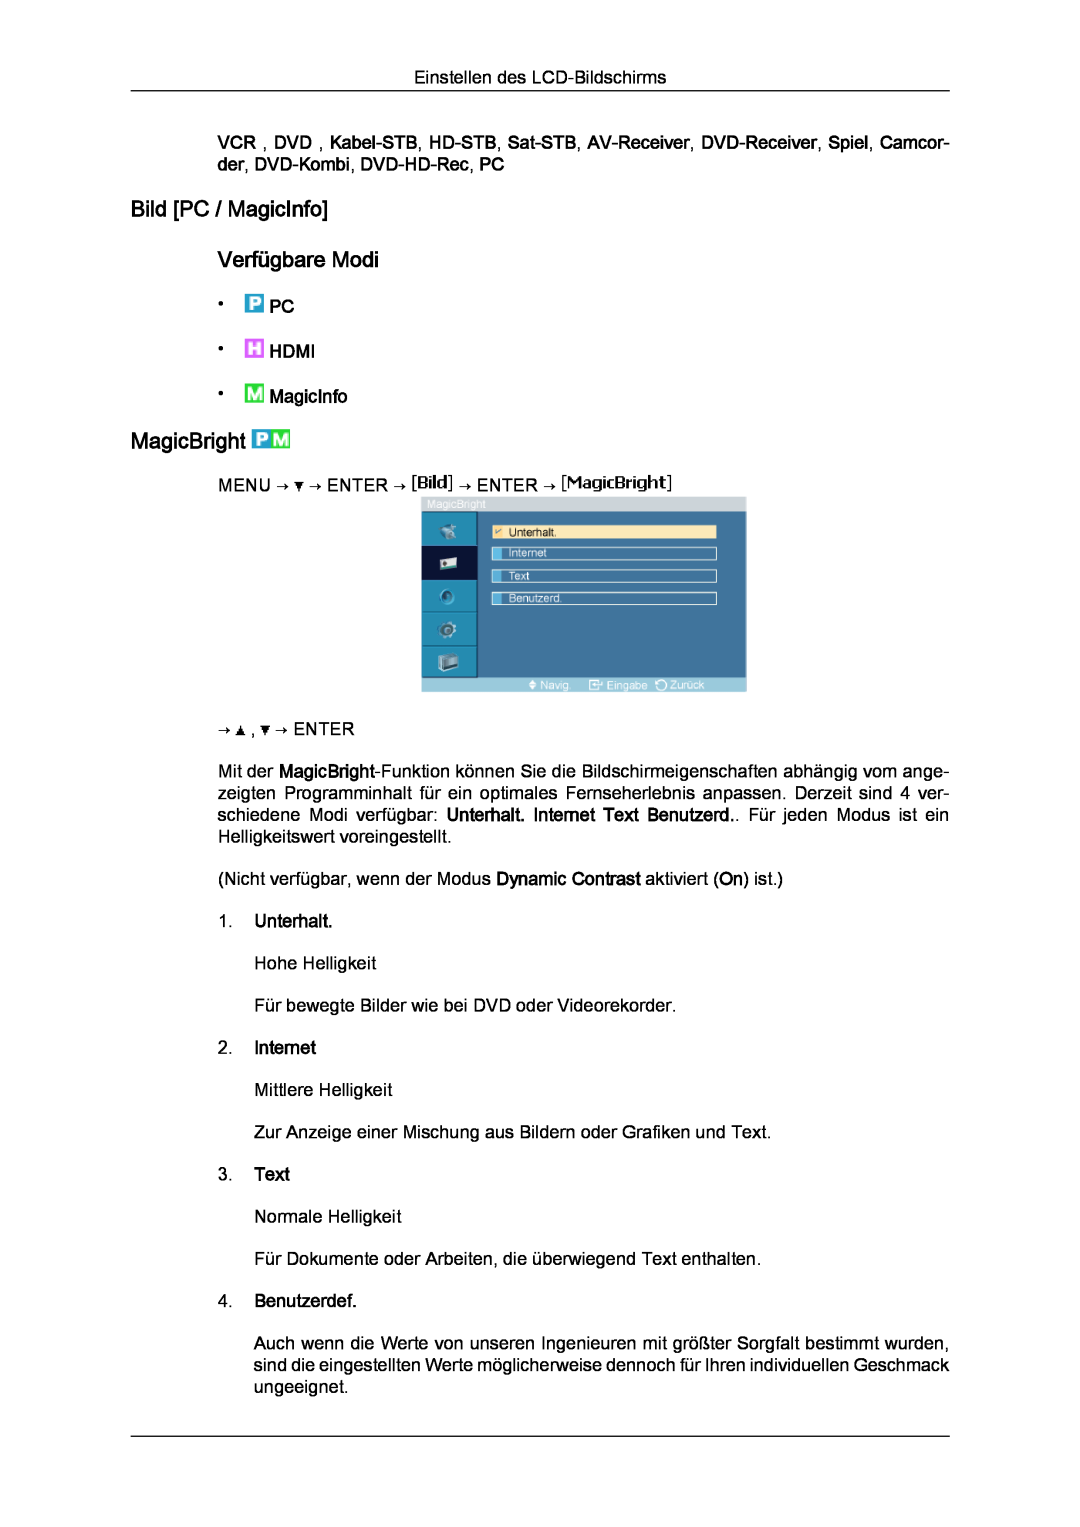 Samsung LH23PTRMBC/EN manual Bild PC / MagicInfo Verfügbare Modi, MagicBright, Unterhalt. Hohe Helligkeit, Internet, Text 